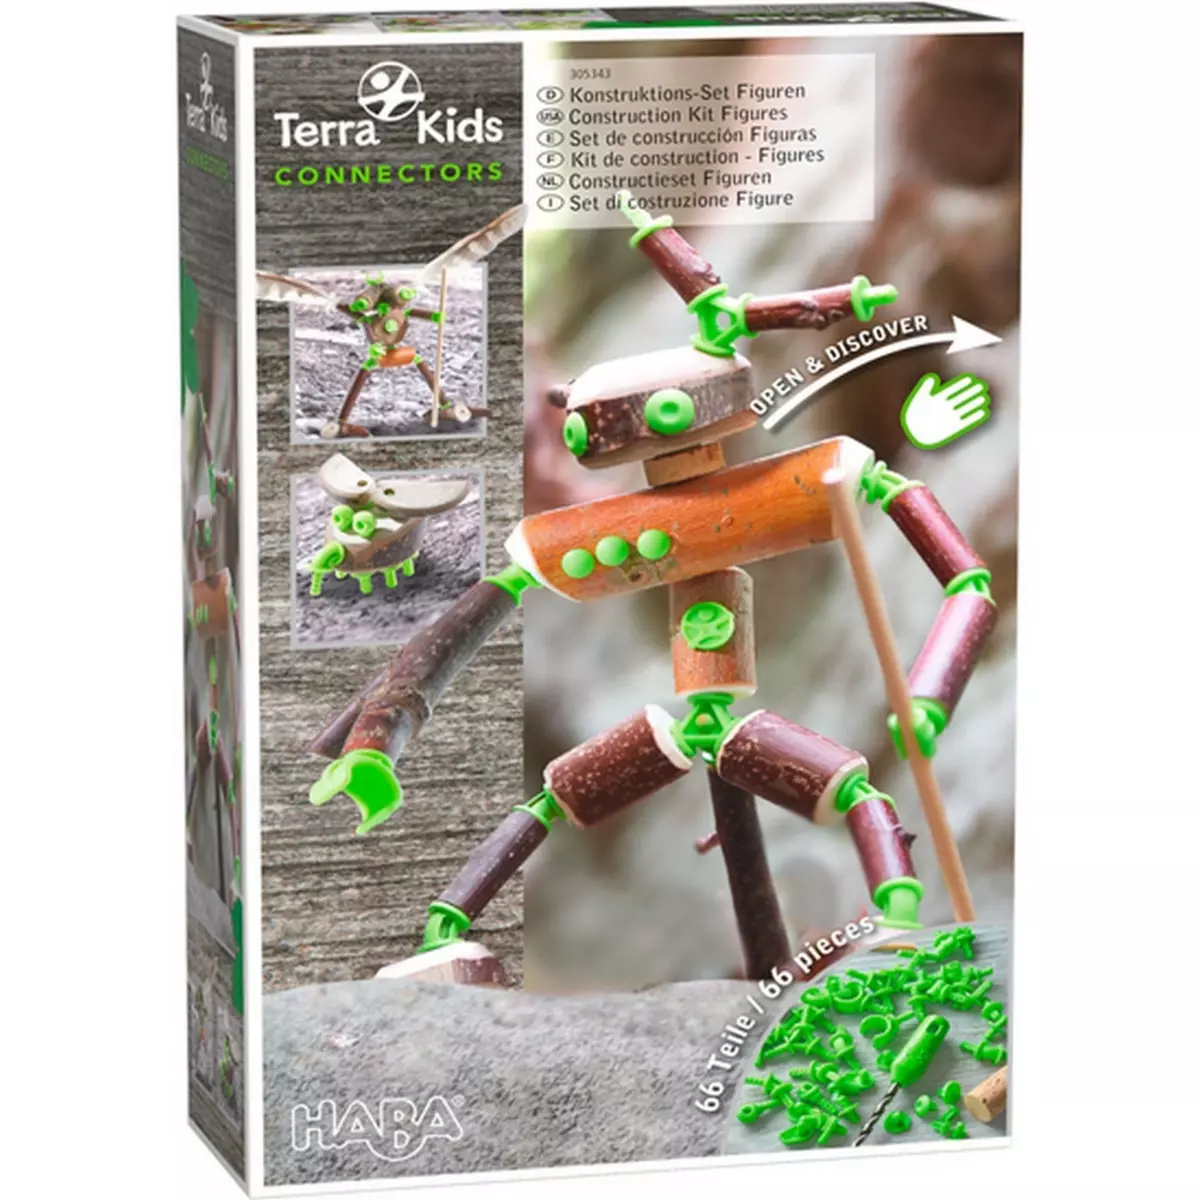 Haba Terra Kids connectors kit